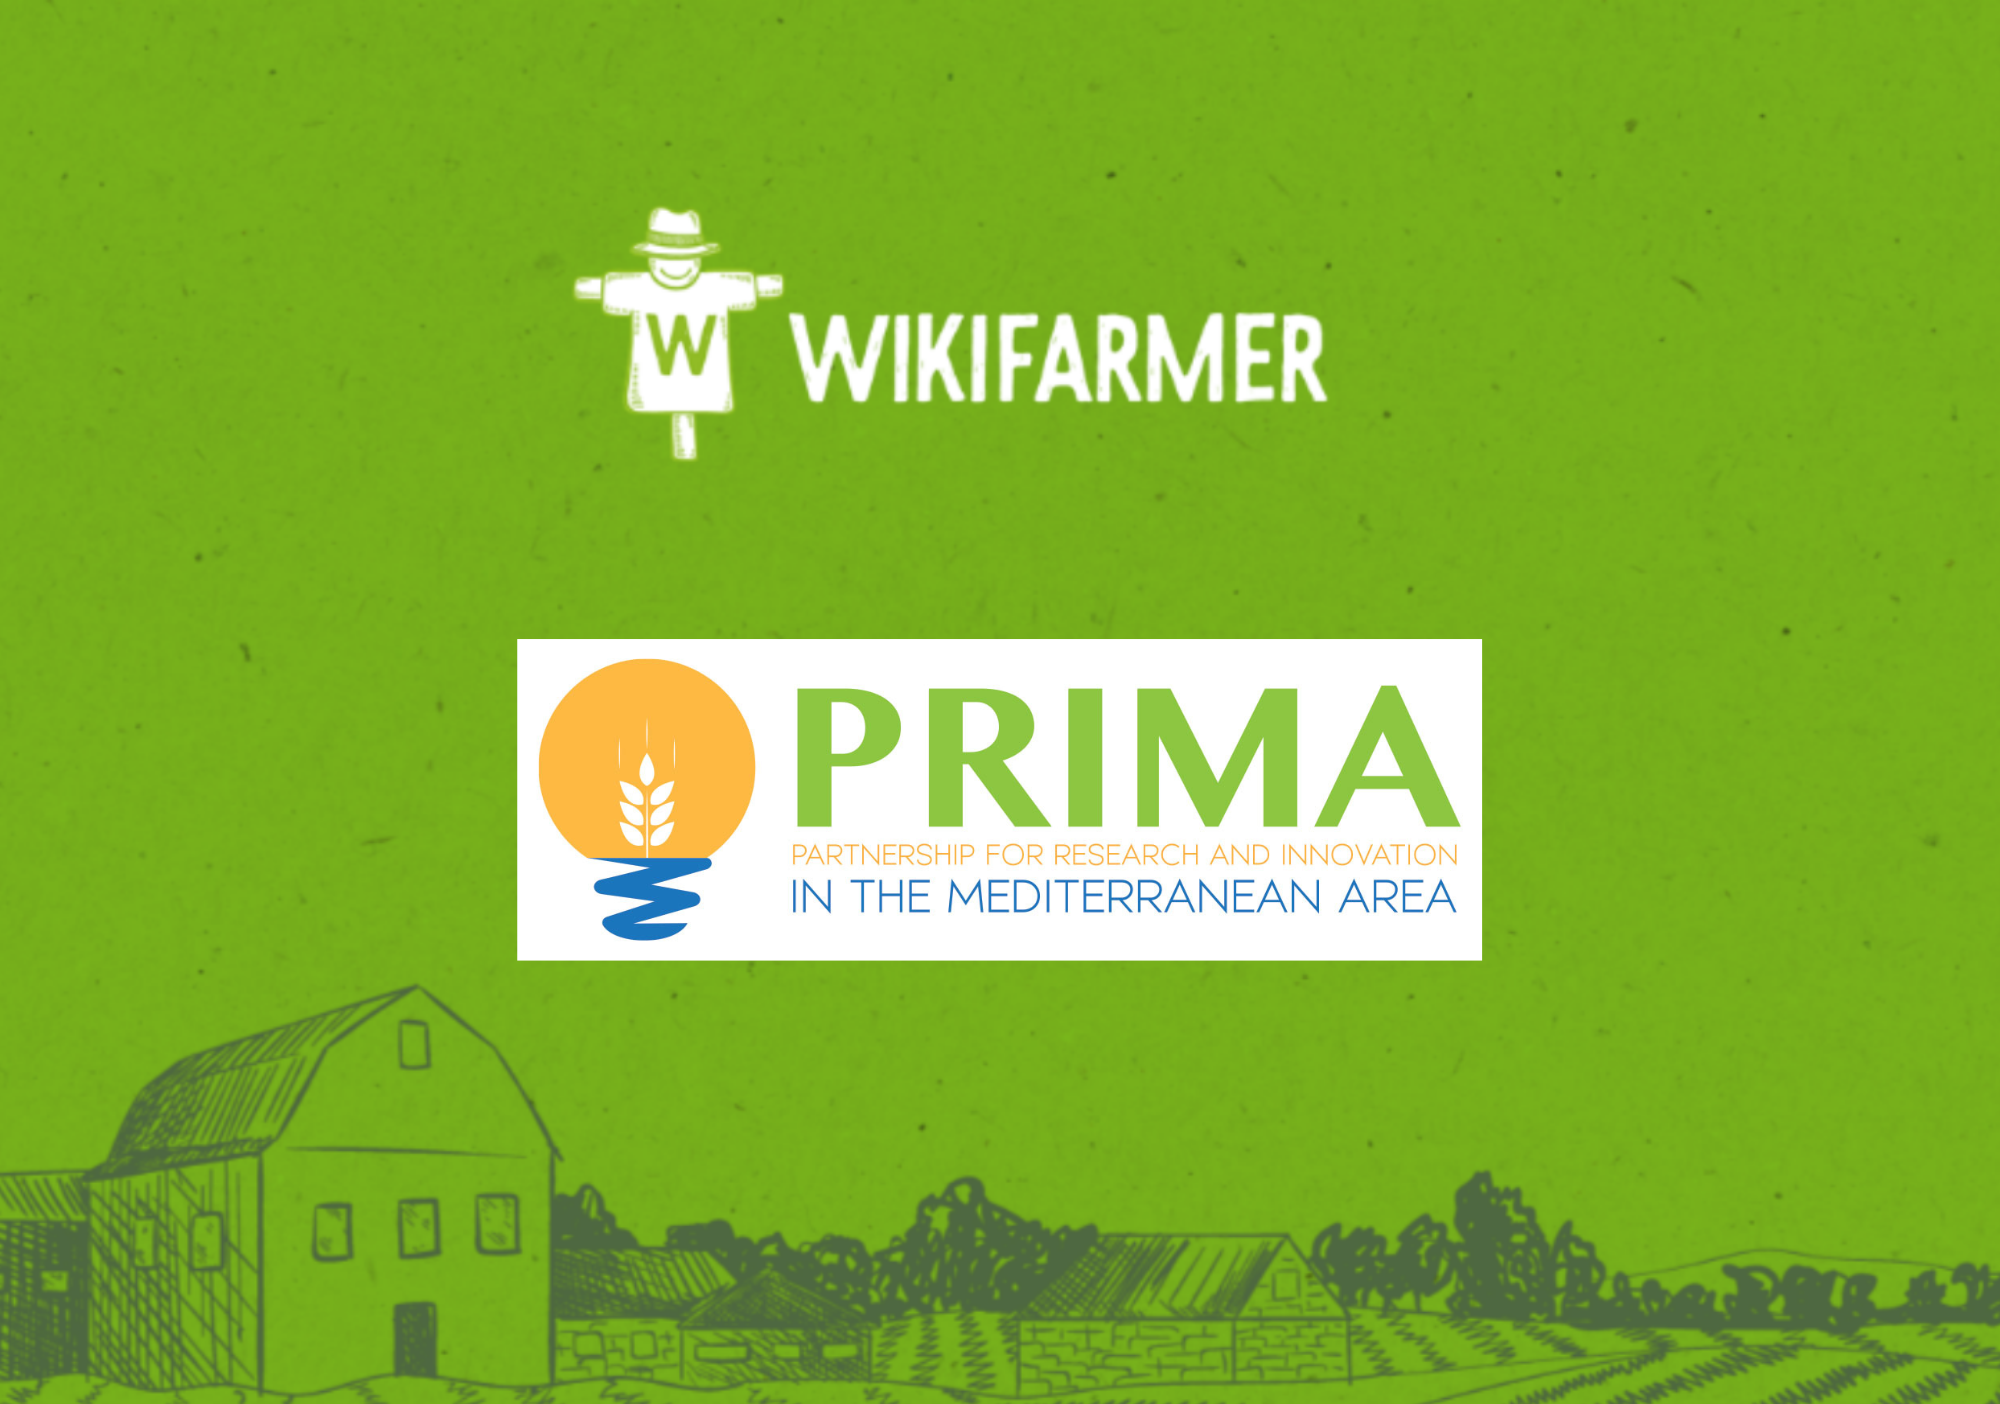 Partnership between Wikifarmer and PRIMA